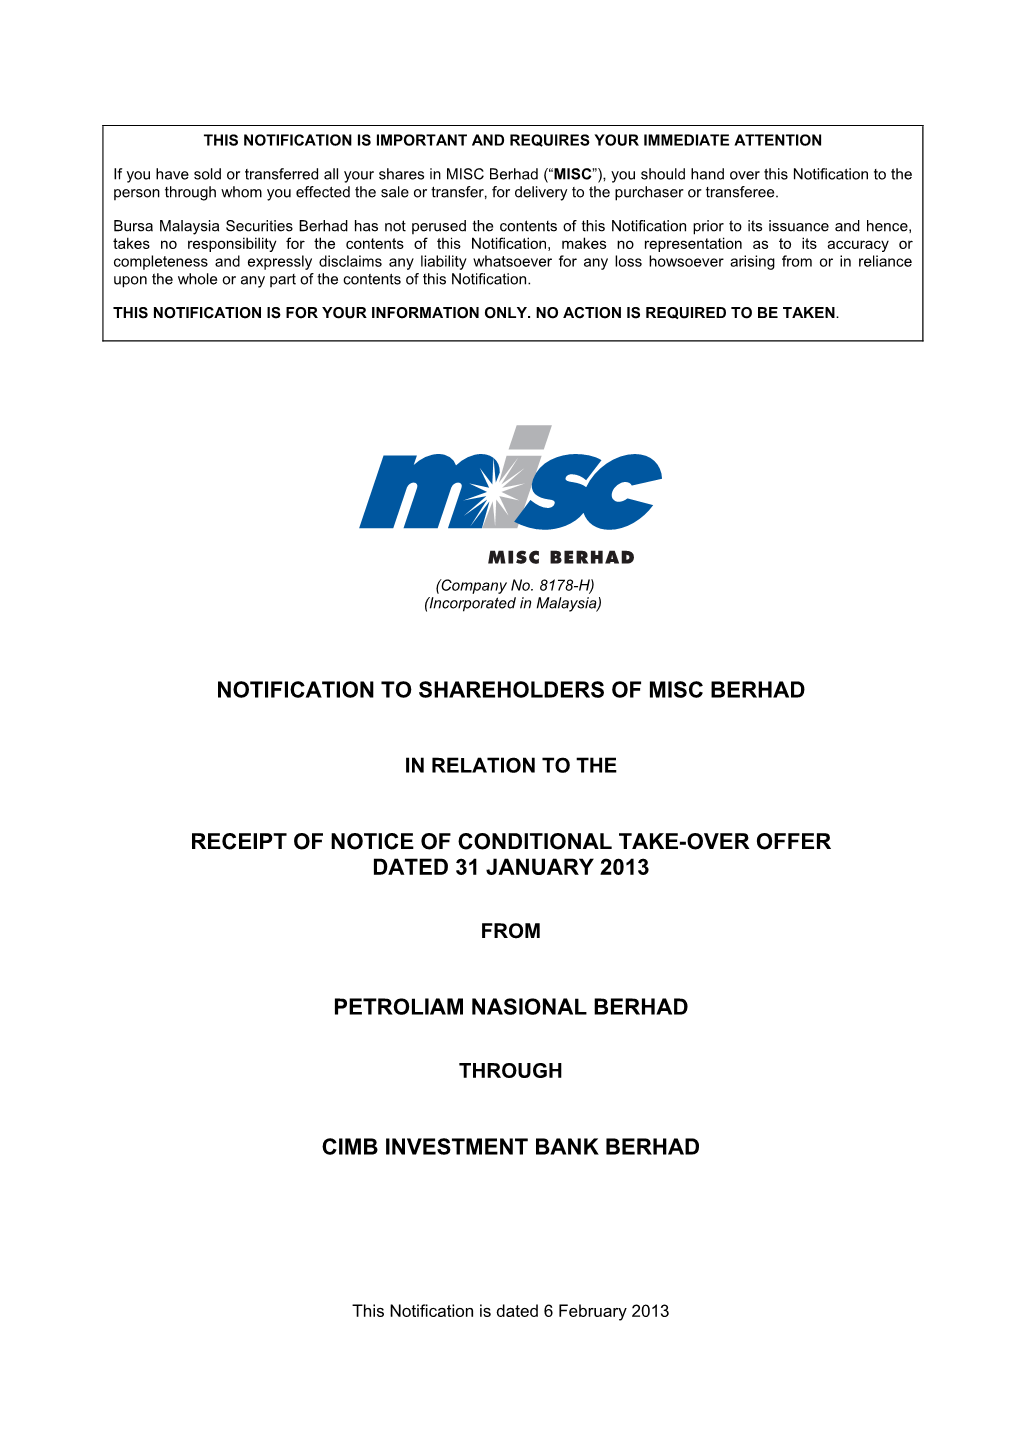 Notification to Shareholders of Misc Berhad Receipt Of